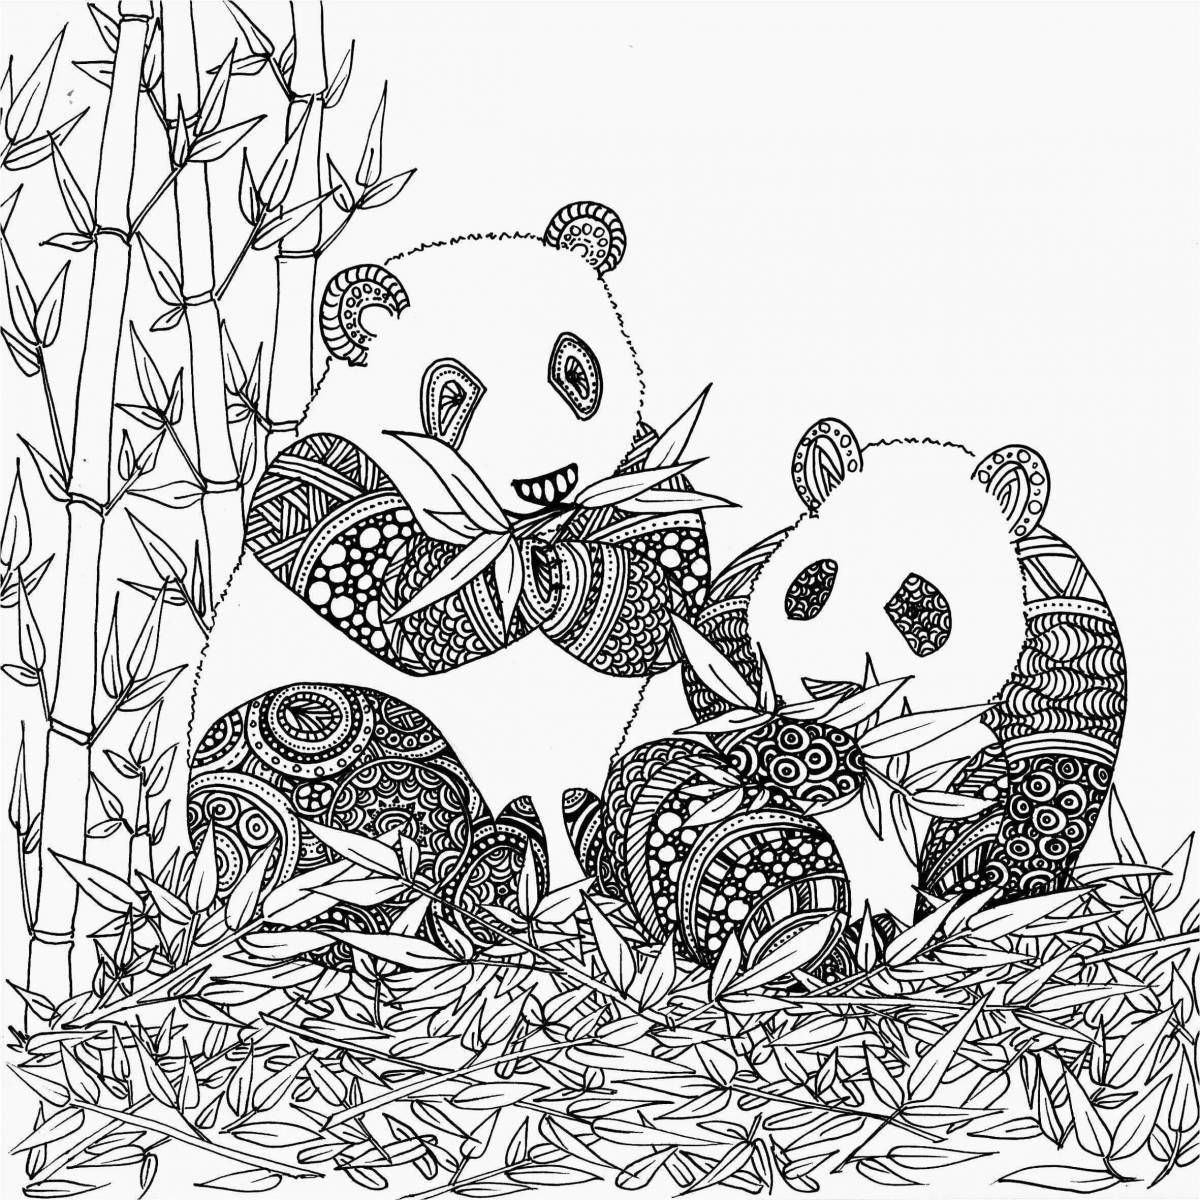 Bright panda coloring book with bamboo